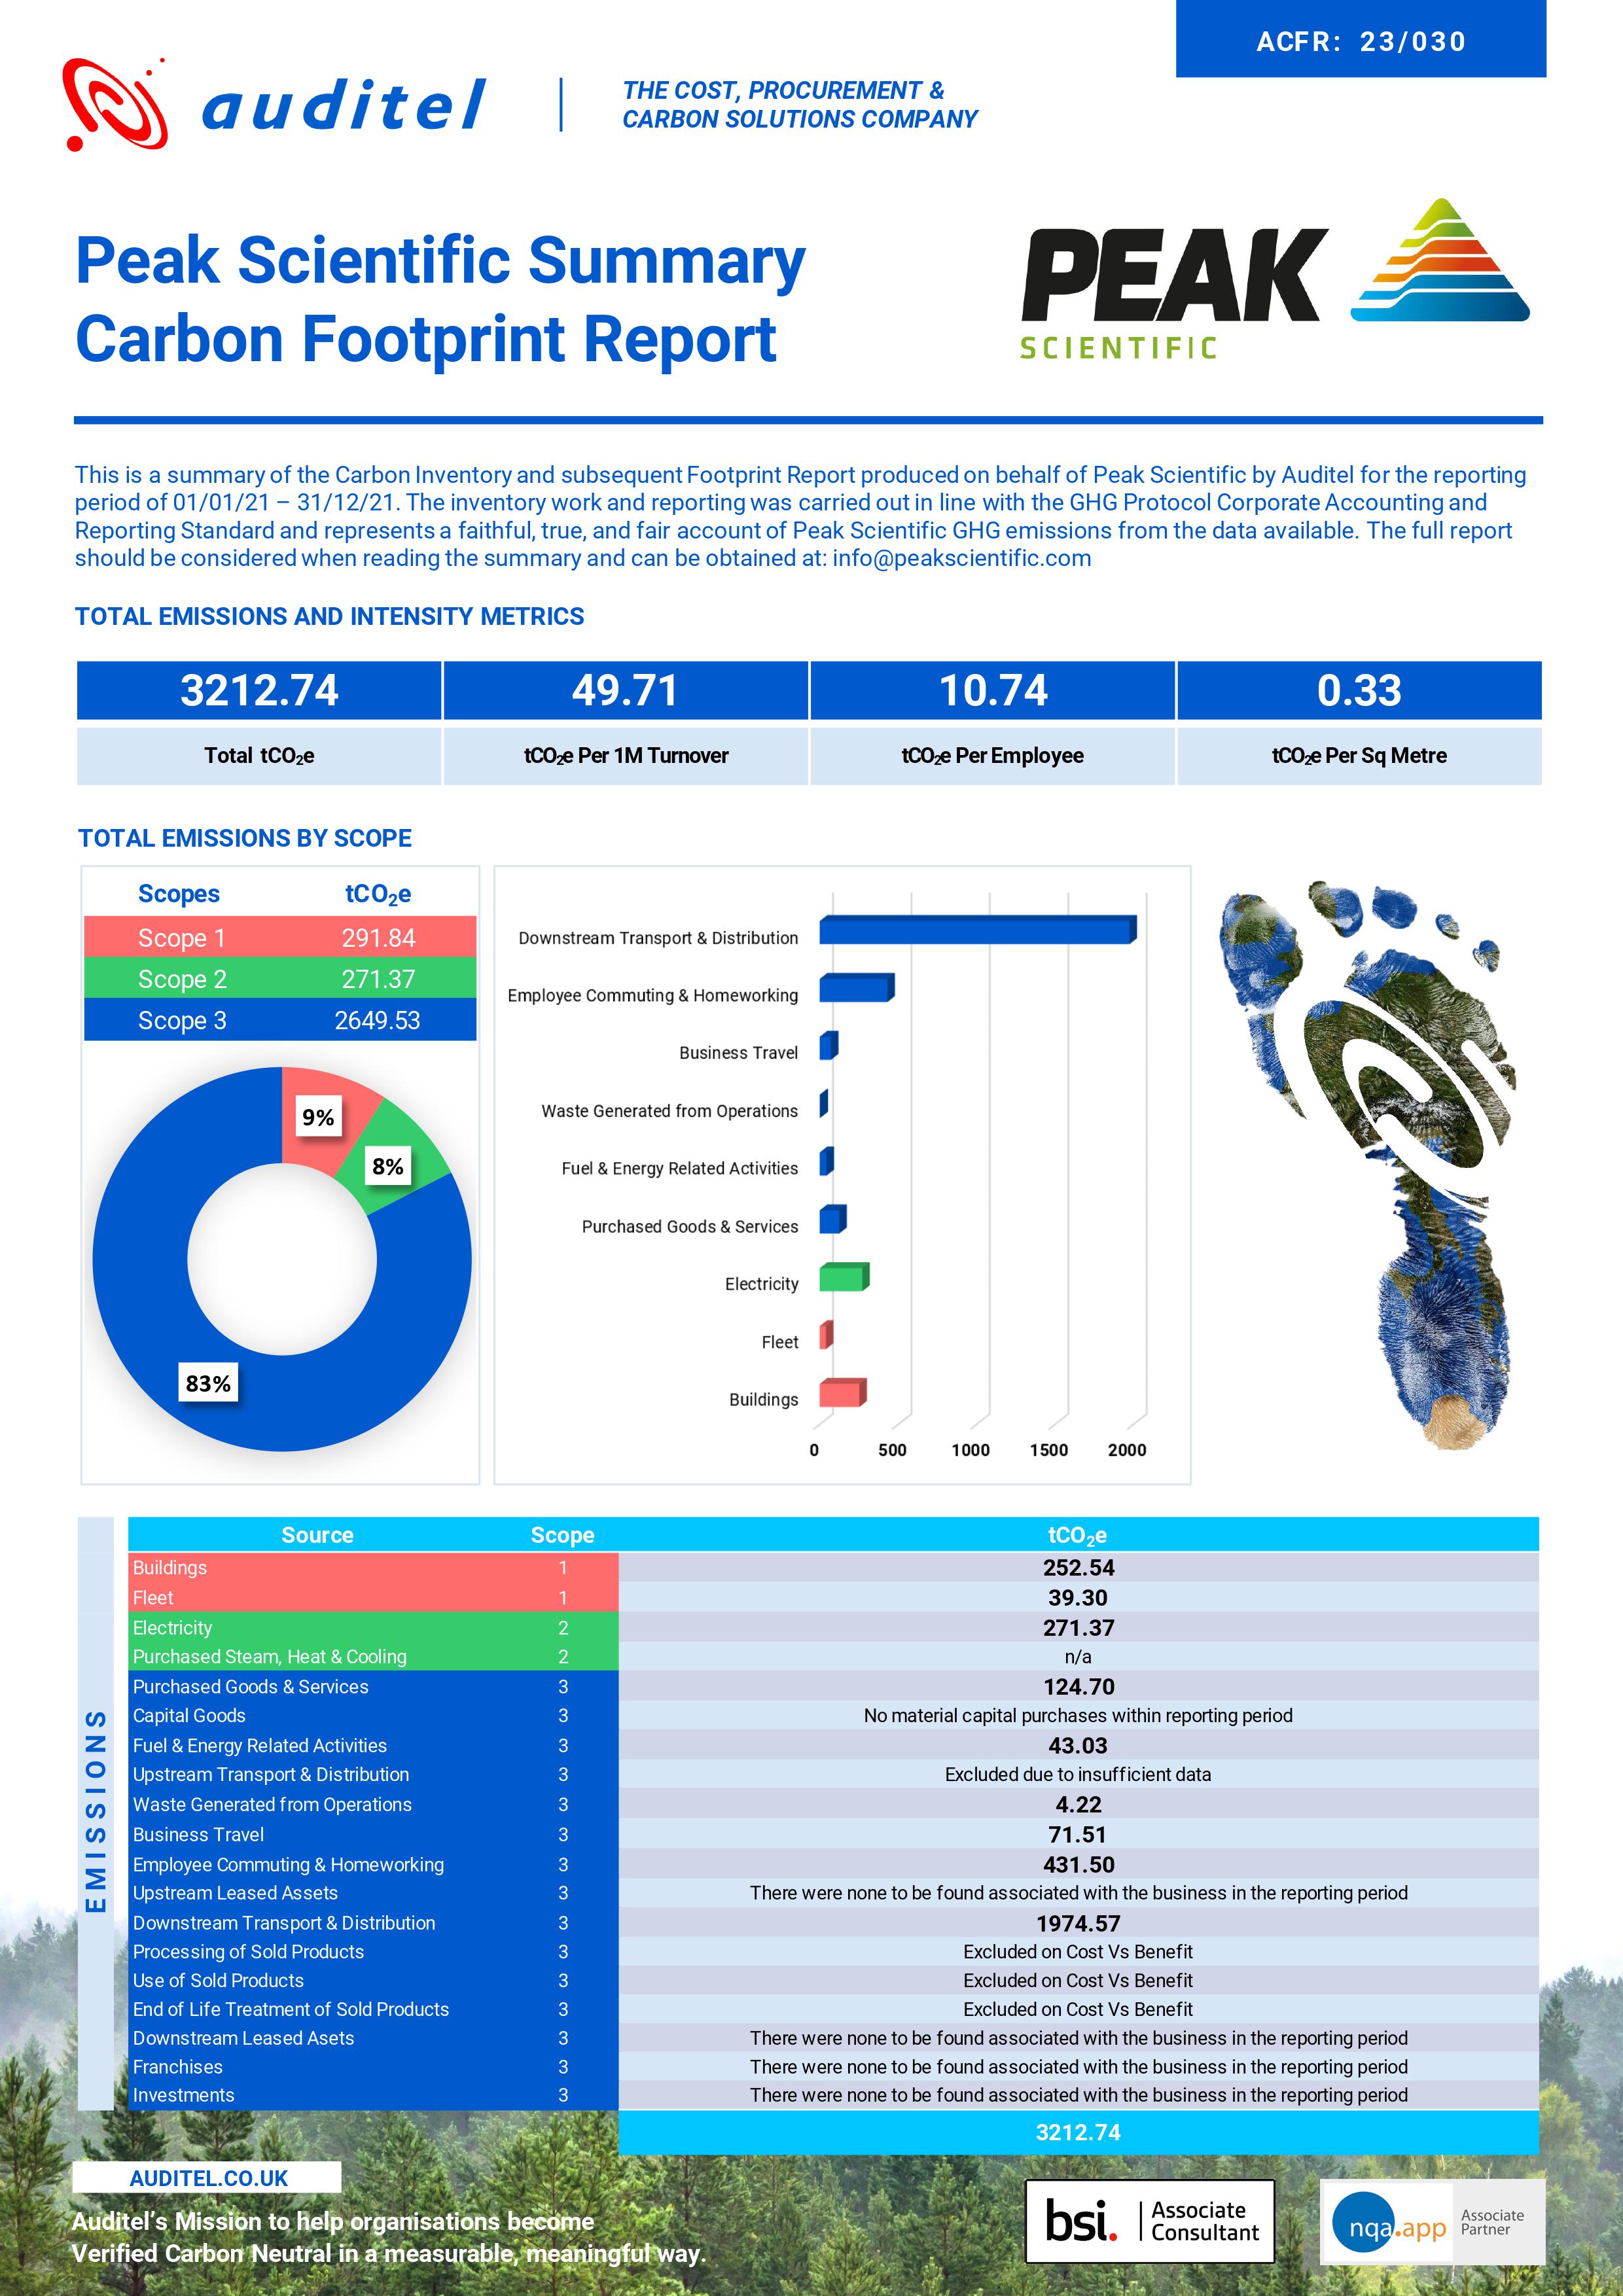 Carbon Footprint report summary for PEAK Scientific